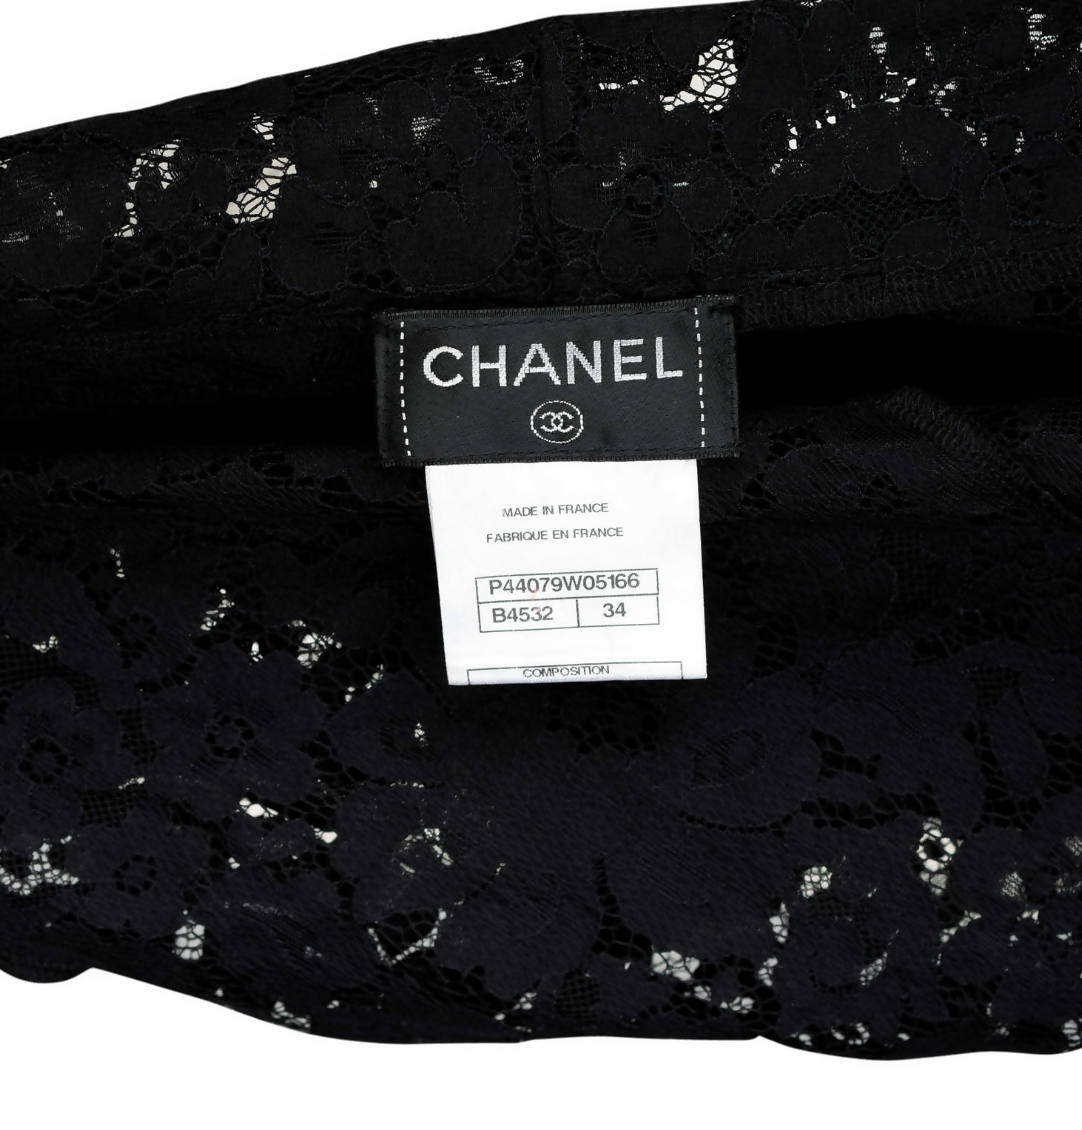 Chanel Jacket - Lace